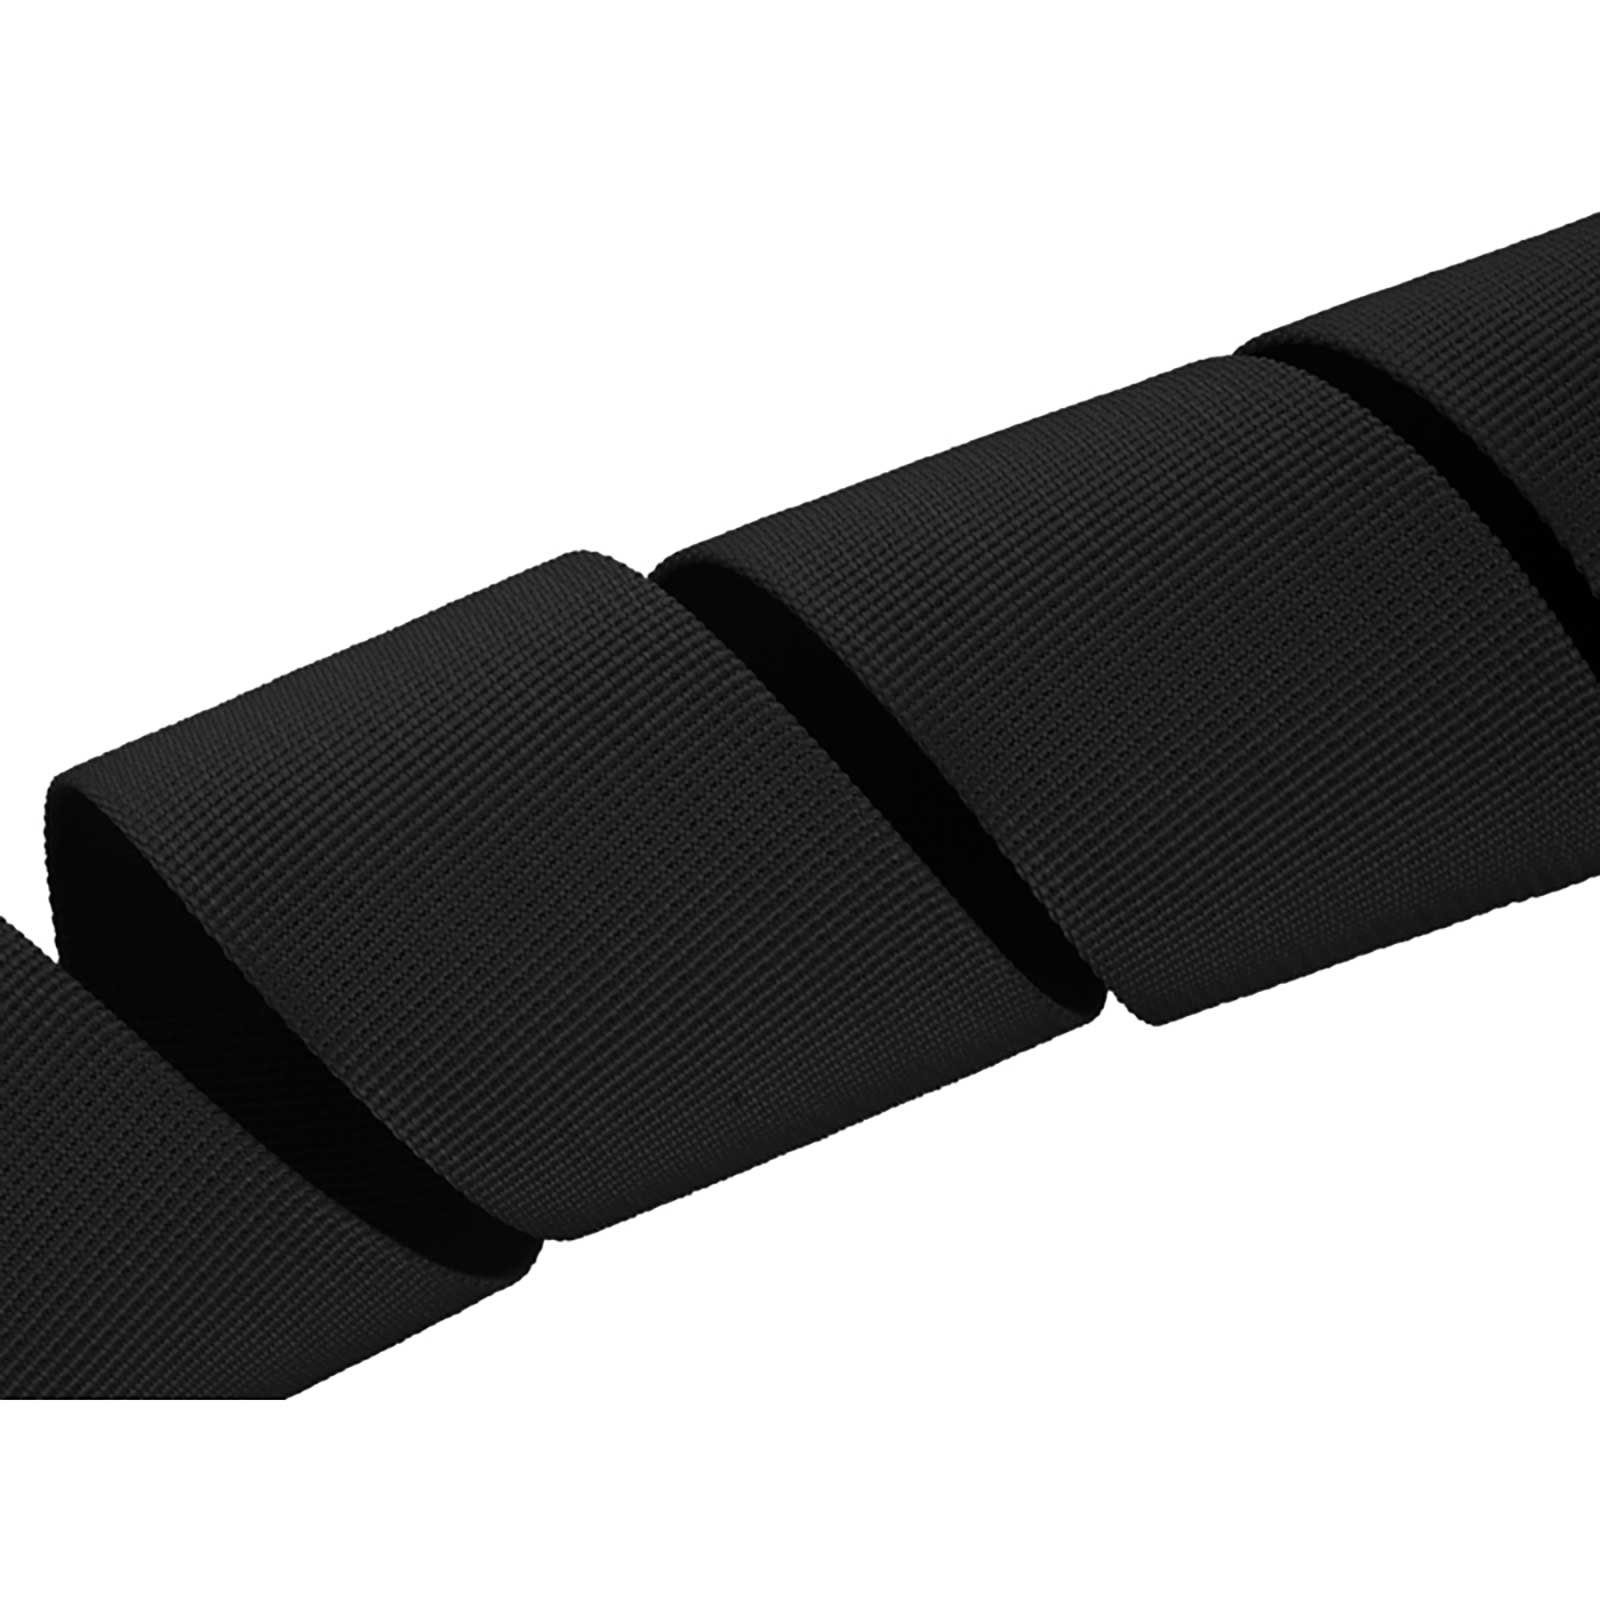 50mm Gurtband Polyester 580 lang schwarz 10m maDDma Farbwahl Rollladengurt, breit